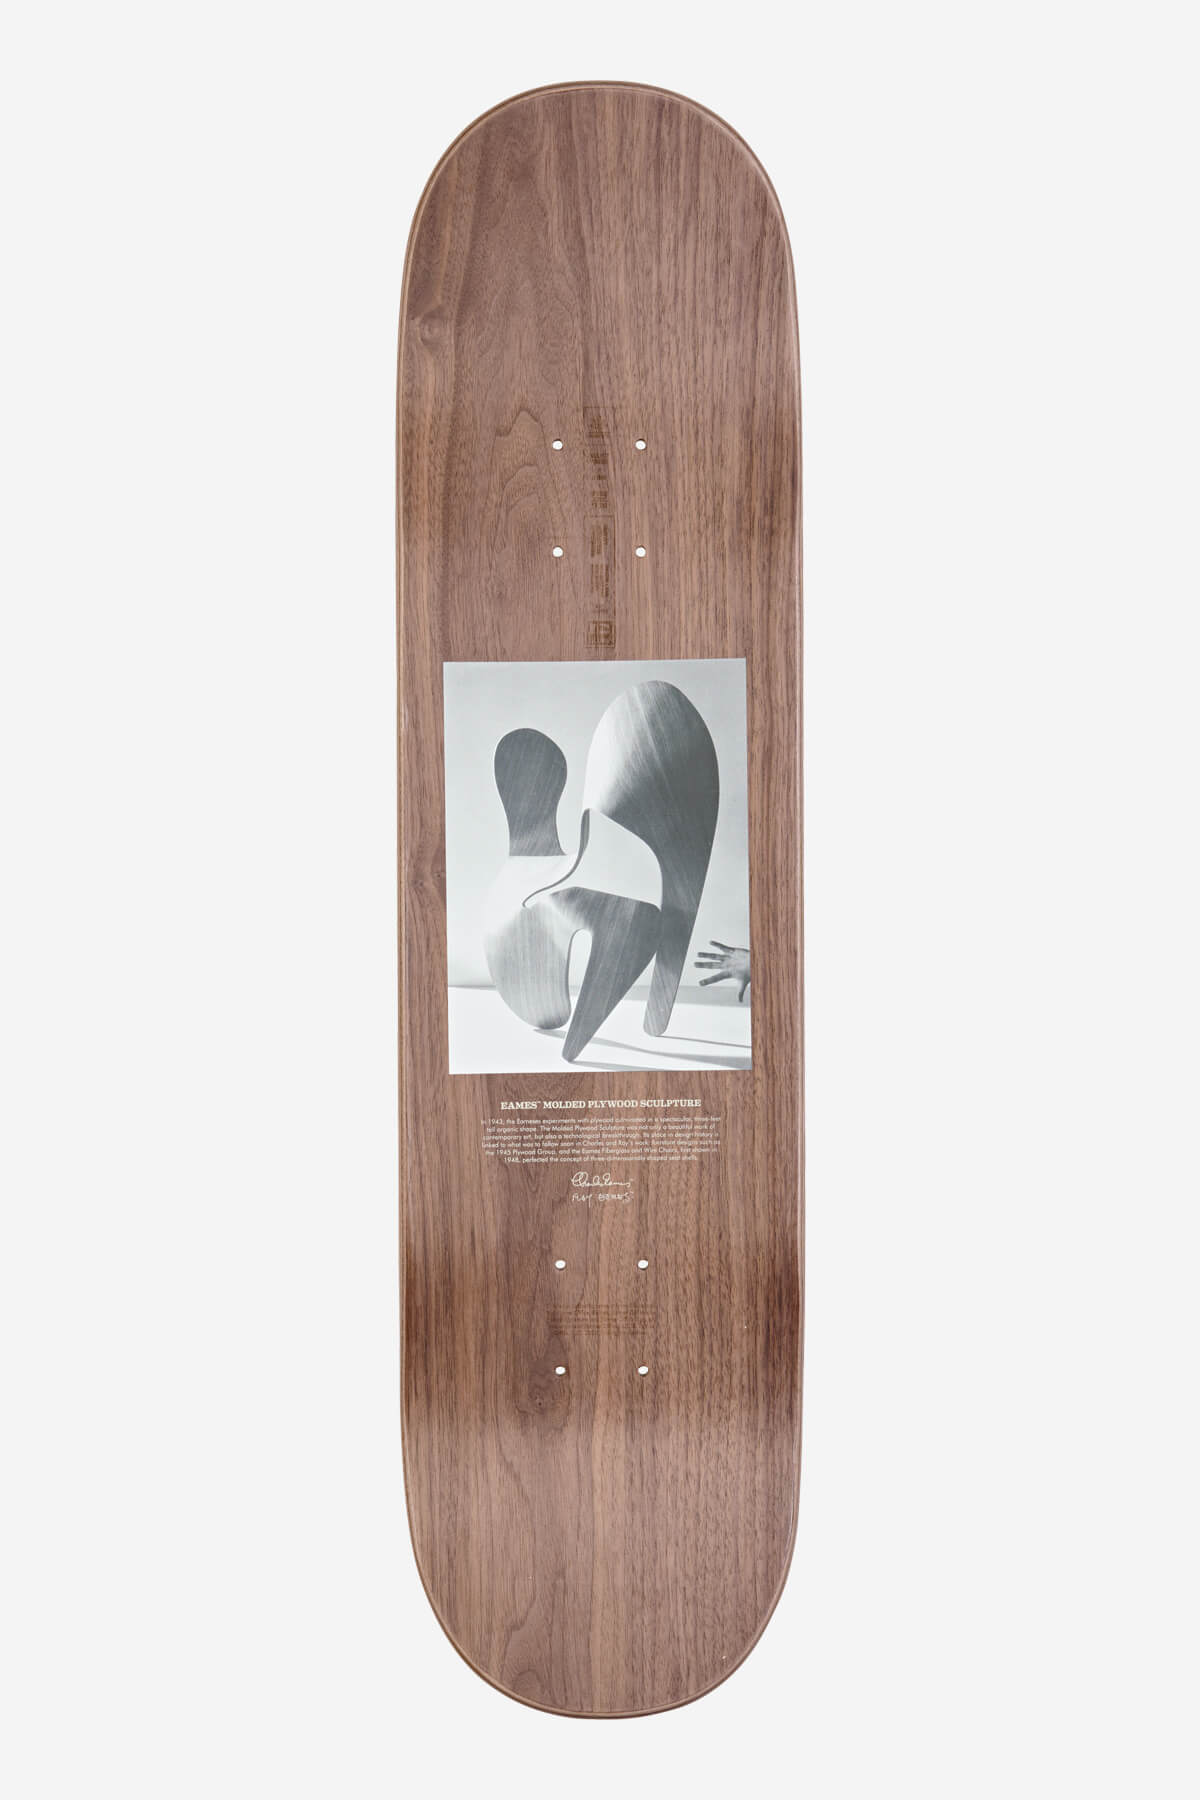 Globe - Silhouette Eames - Plywood Sculpture - 8.0" (en anglais) Skateboard Deck